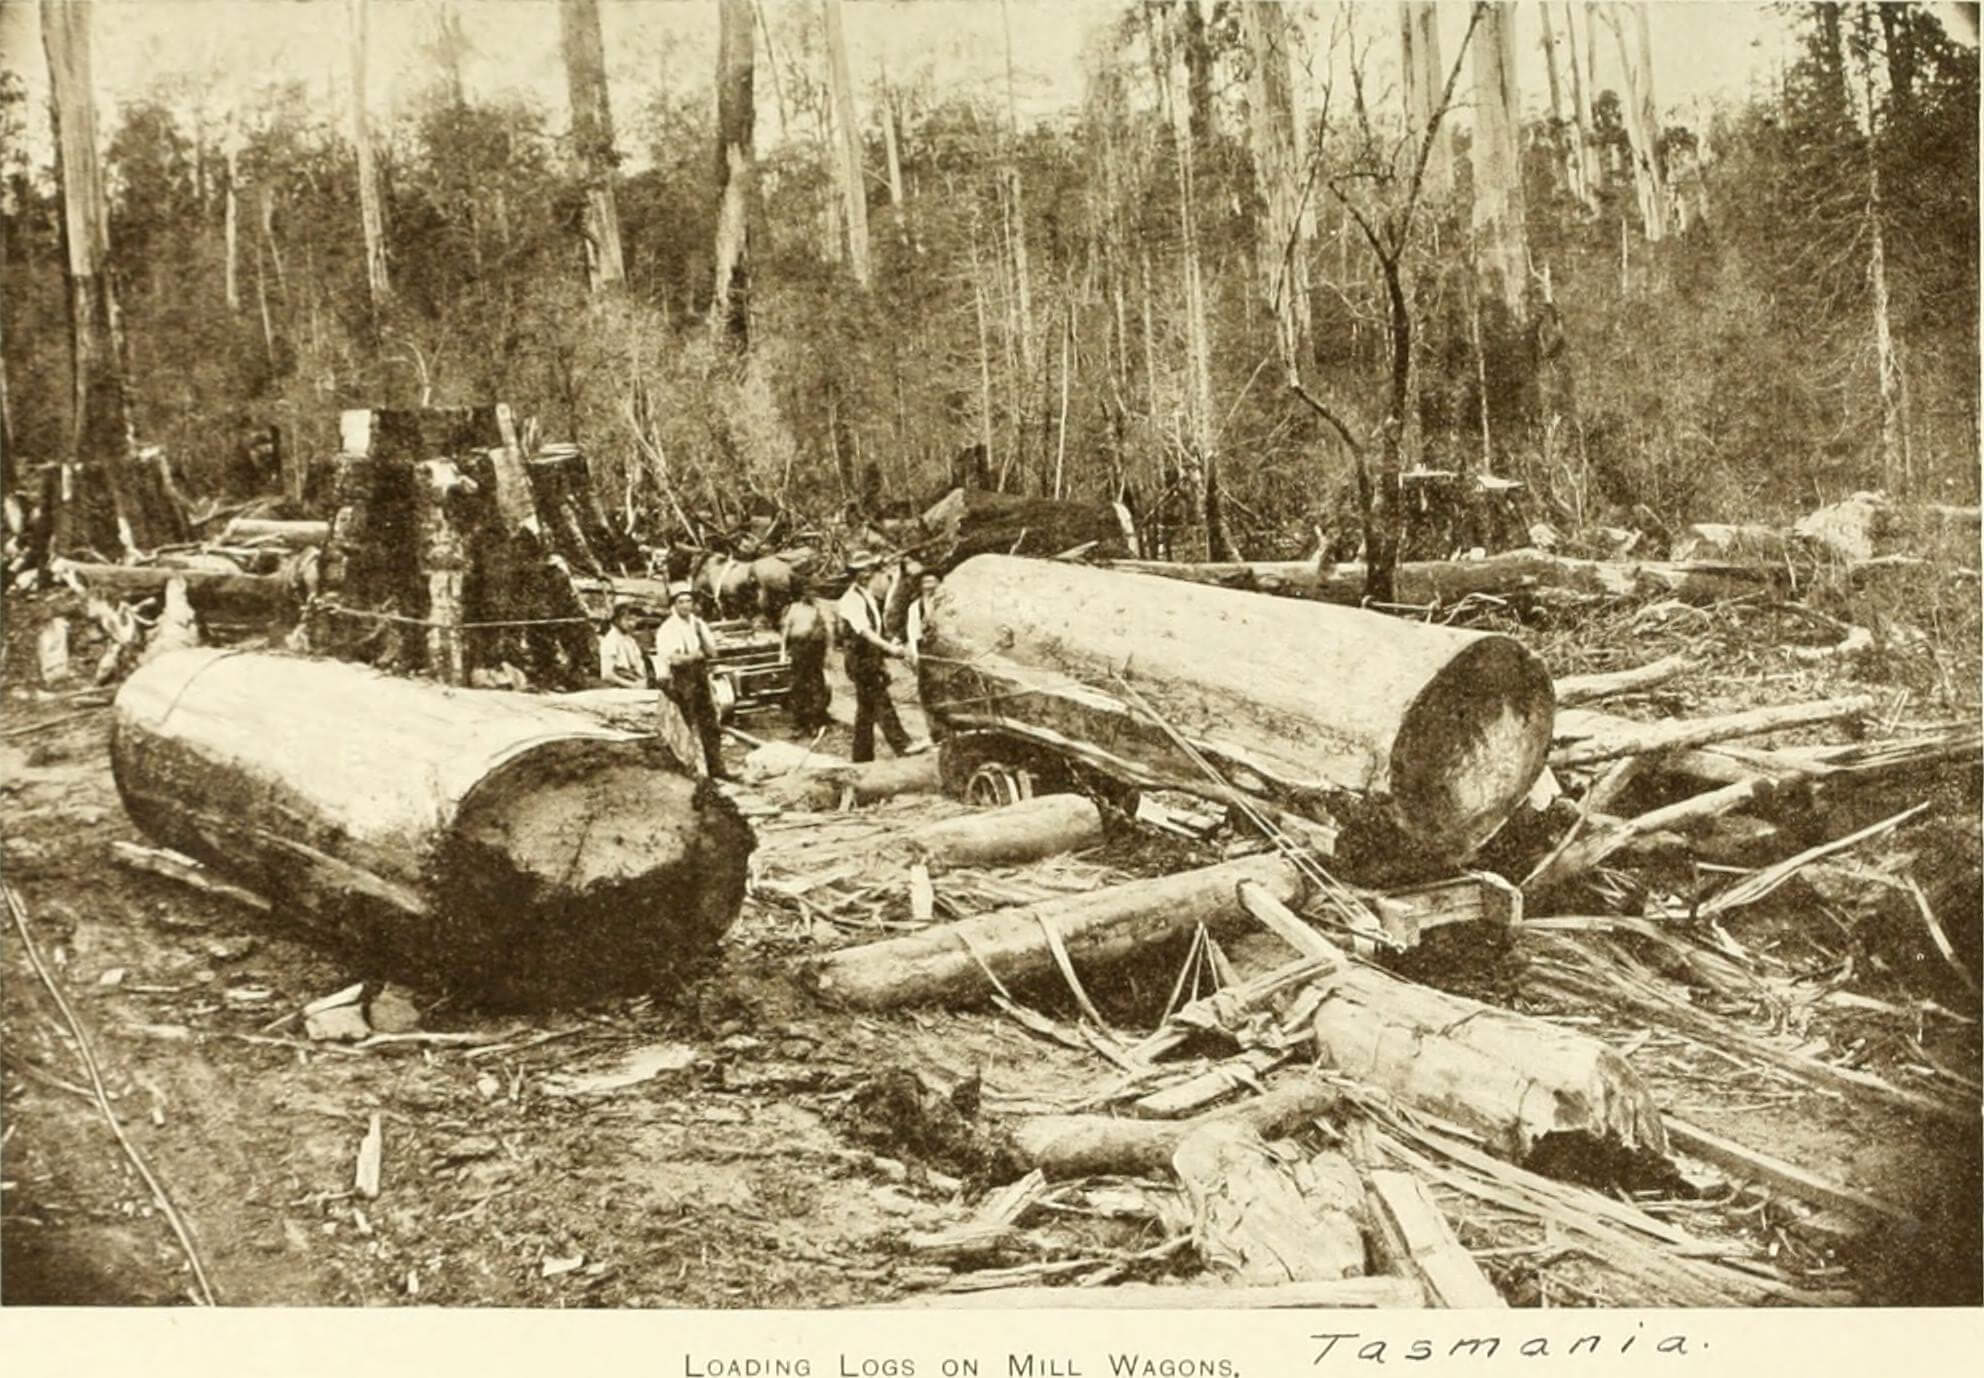 A historical photo of deforestation on the West Coast of Tasmania circa 1910